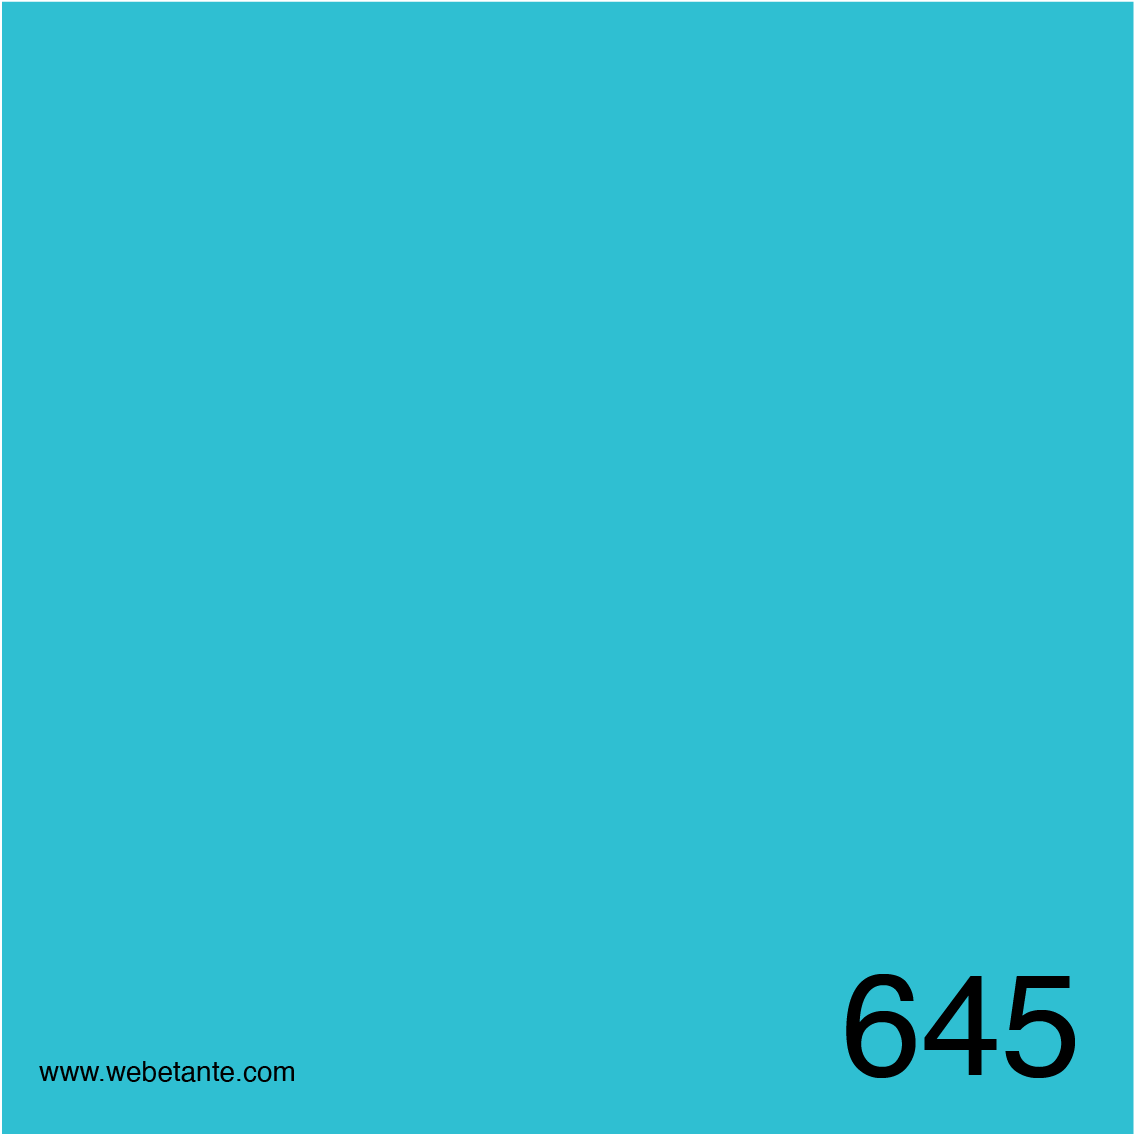 20 g Acid Dyes - 645 Blacklight Blue (Neon)